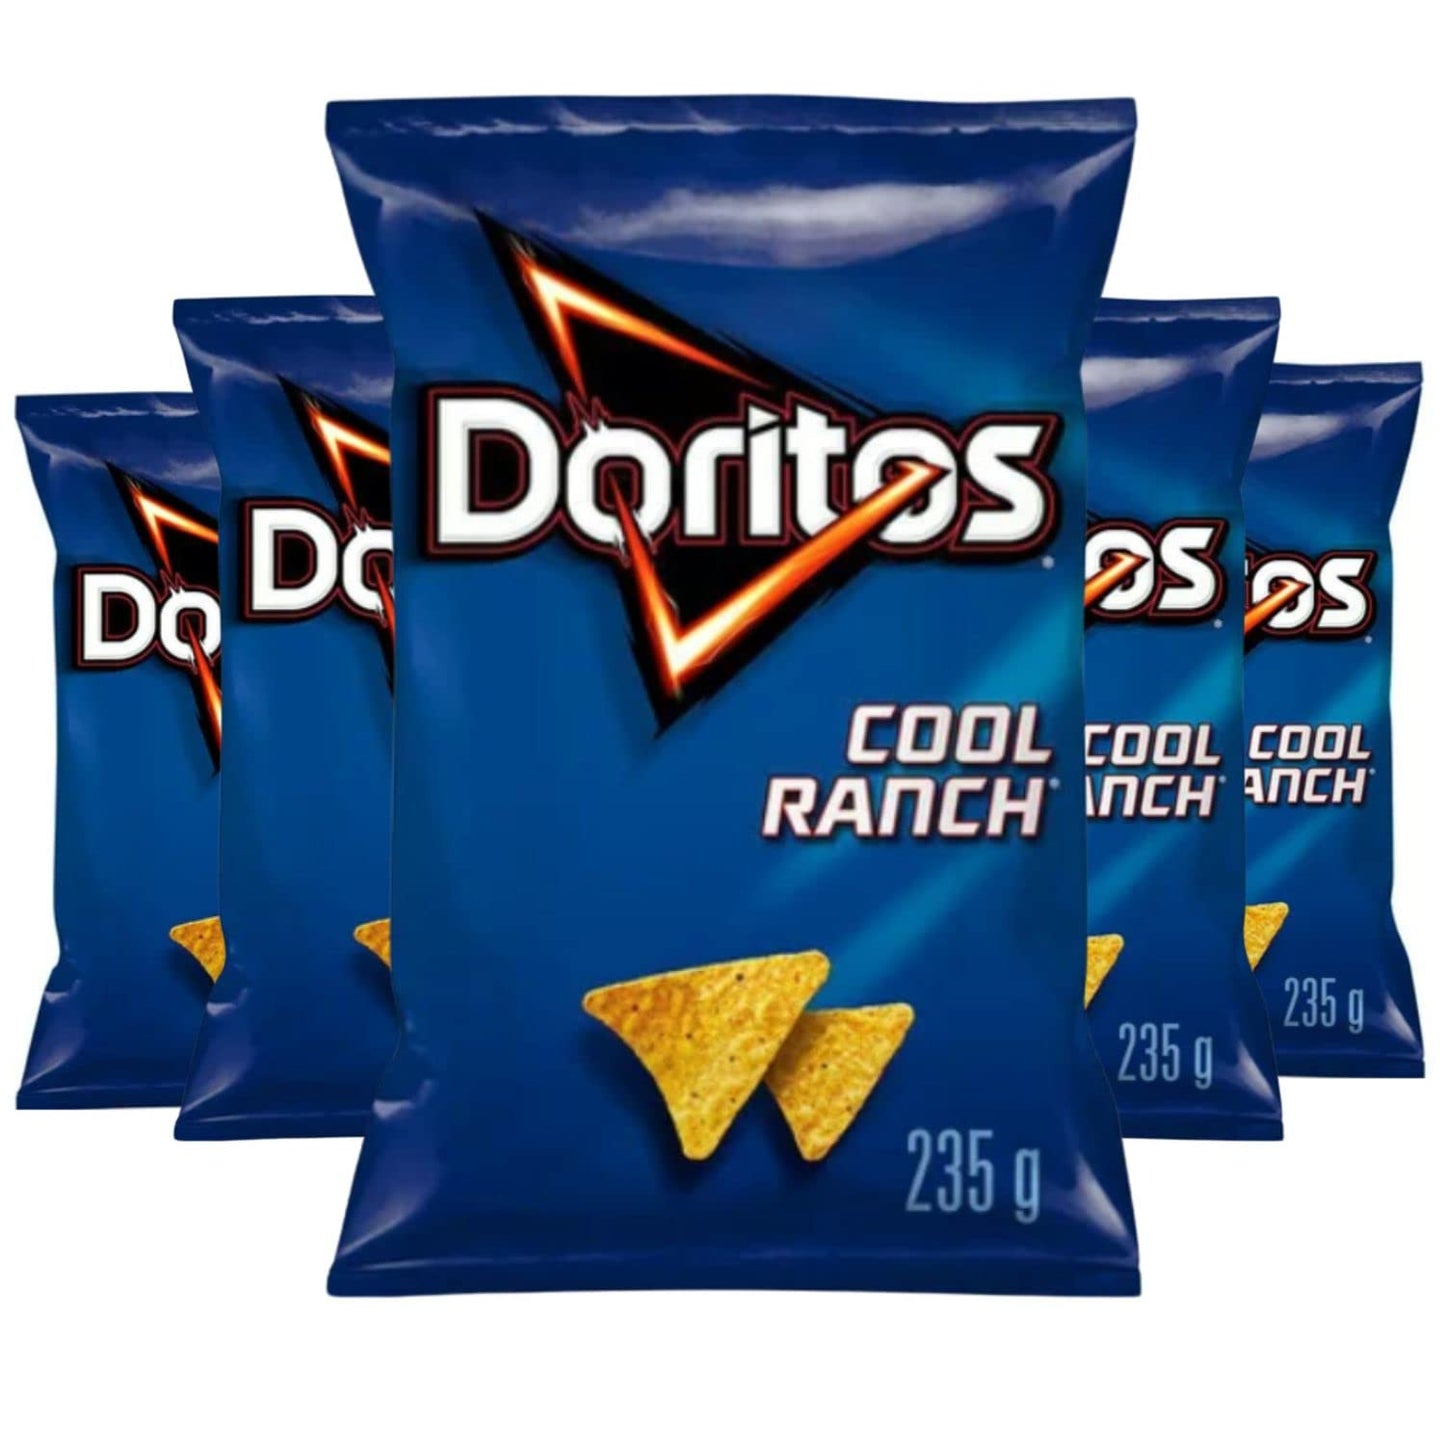 Doritos Cool Ranch Tortilla Chips pack of 5